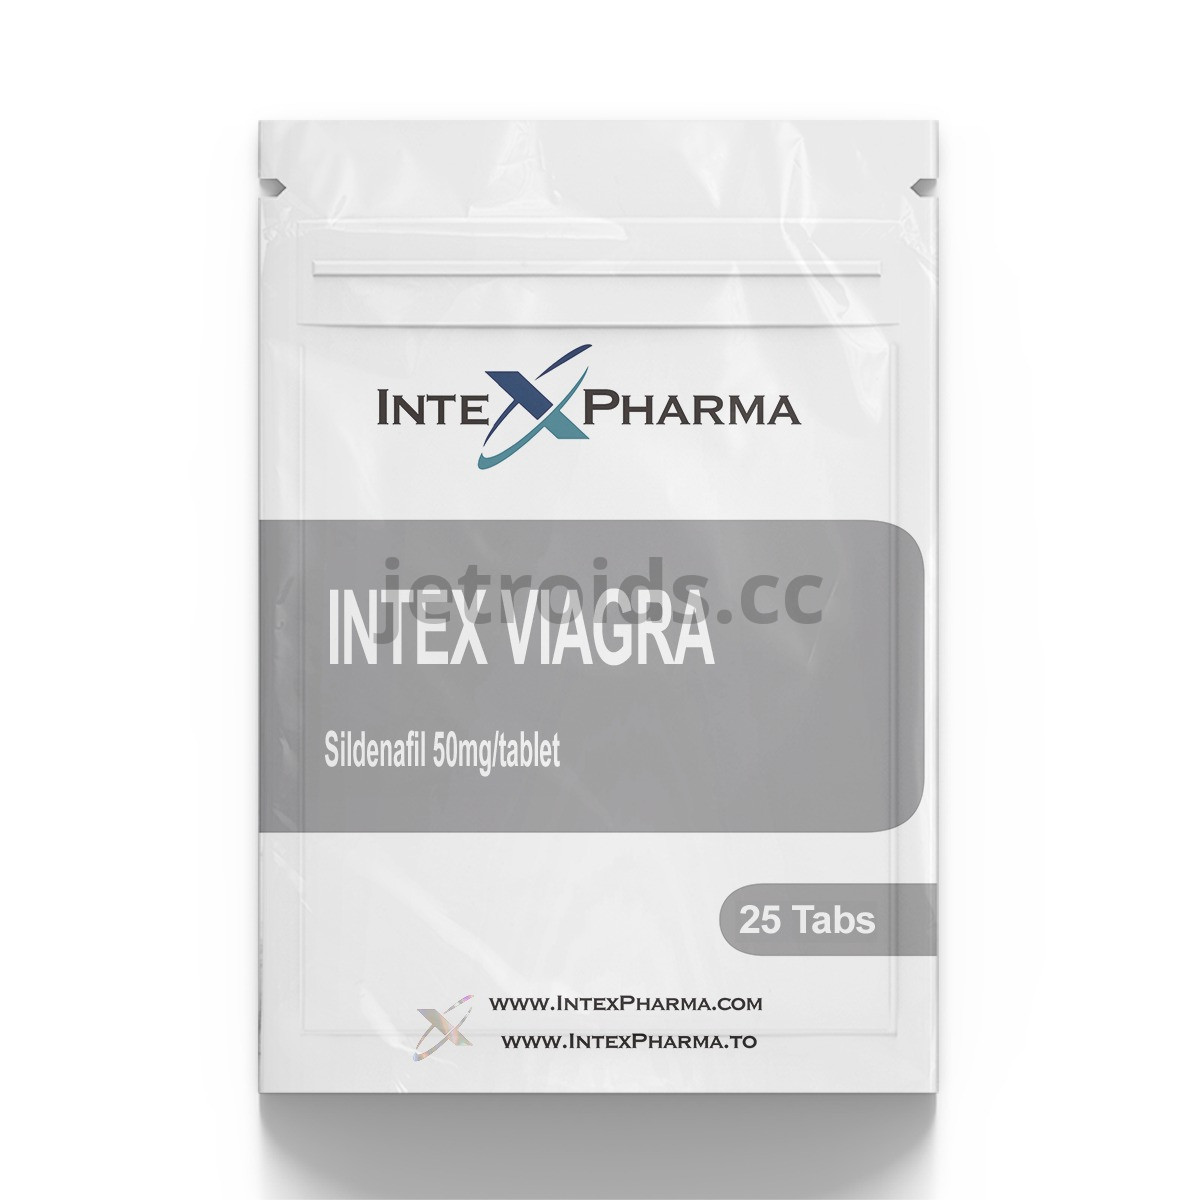 IntexPharma Intex Viagra Product Info